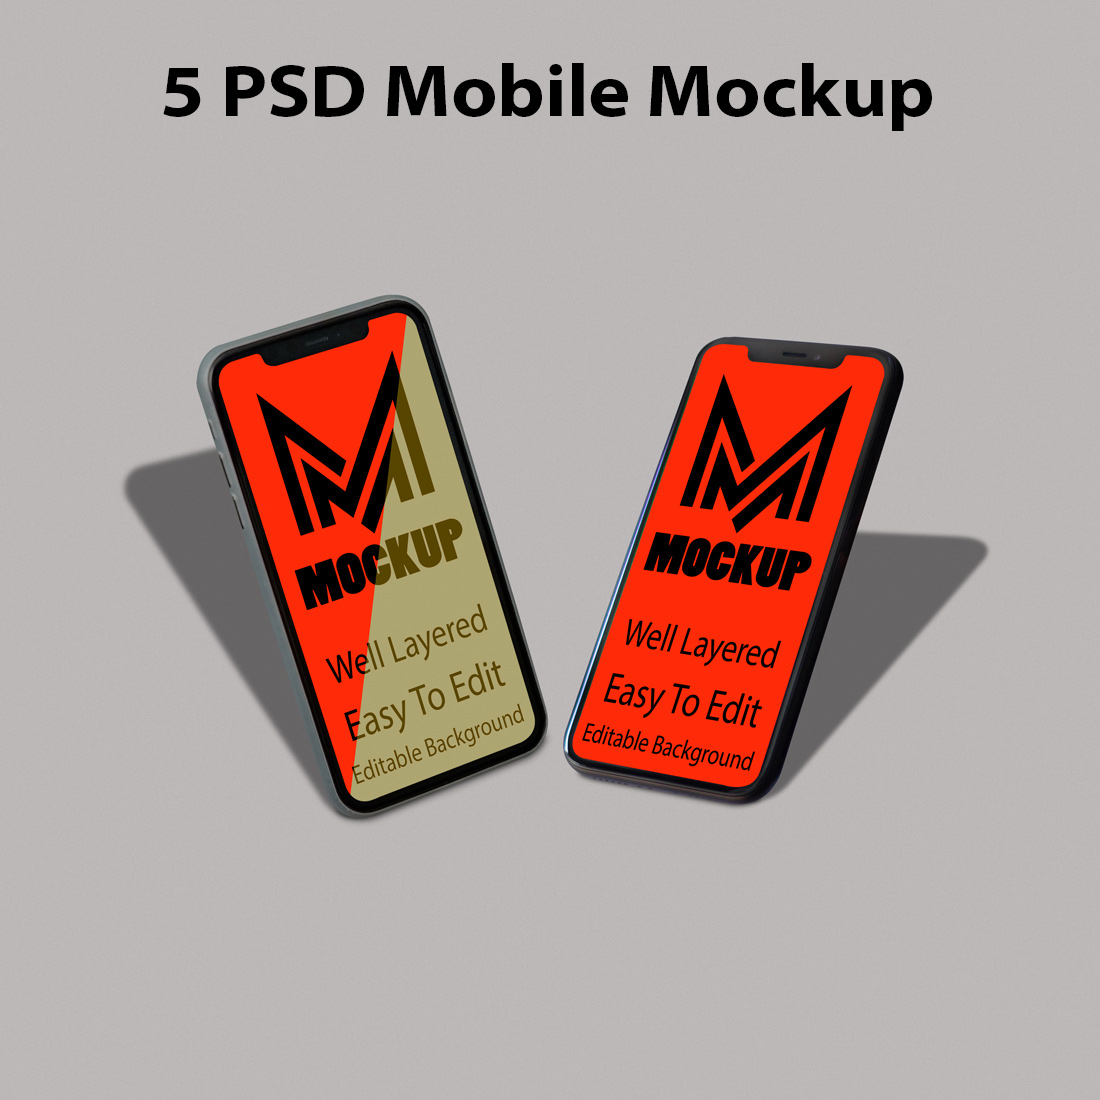 5 PSD Mobile Mockup cover image.